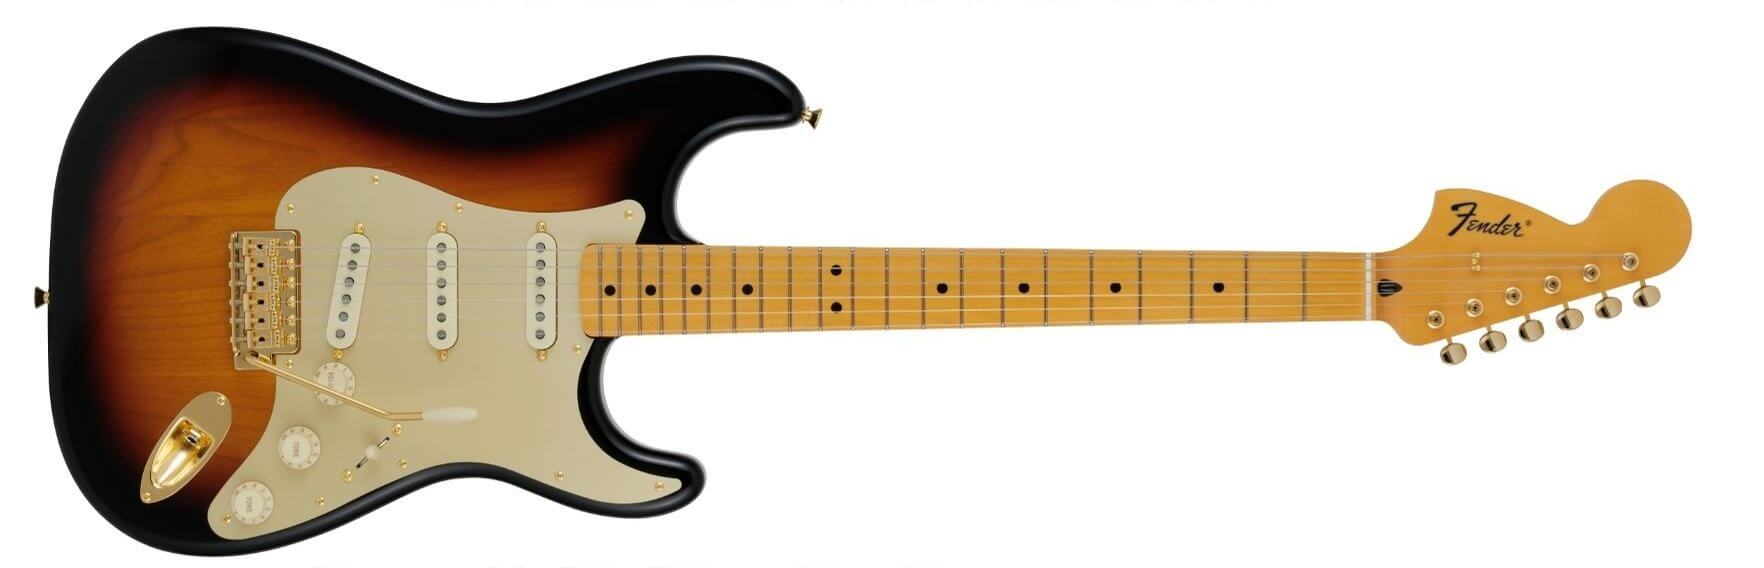 Fender Japan Traditional Stratocaster Reverse Head